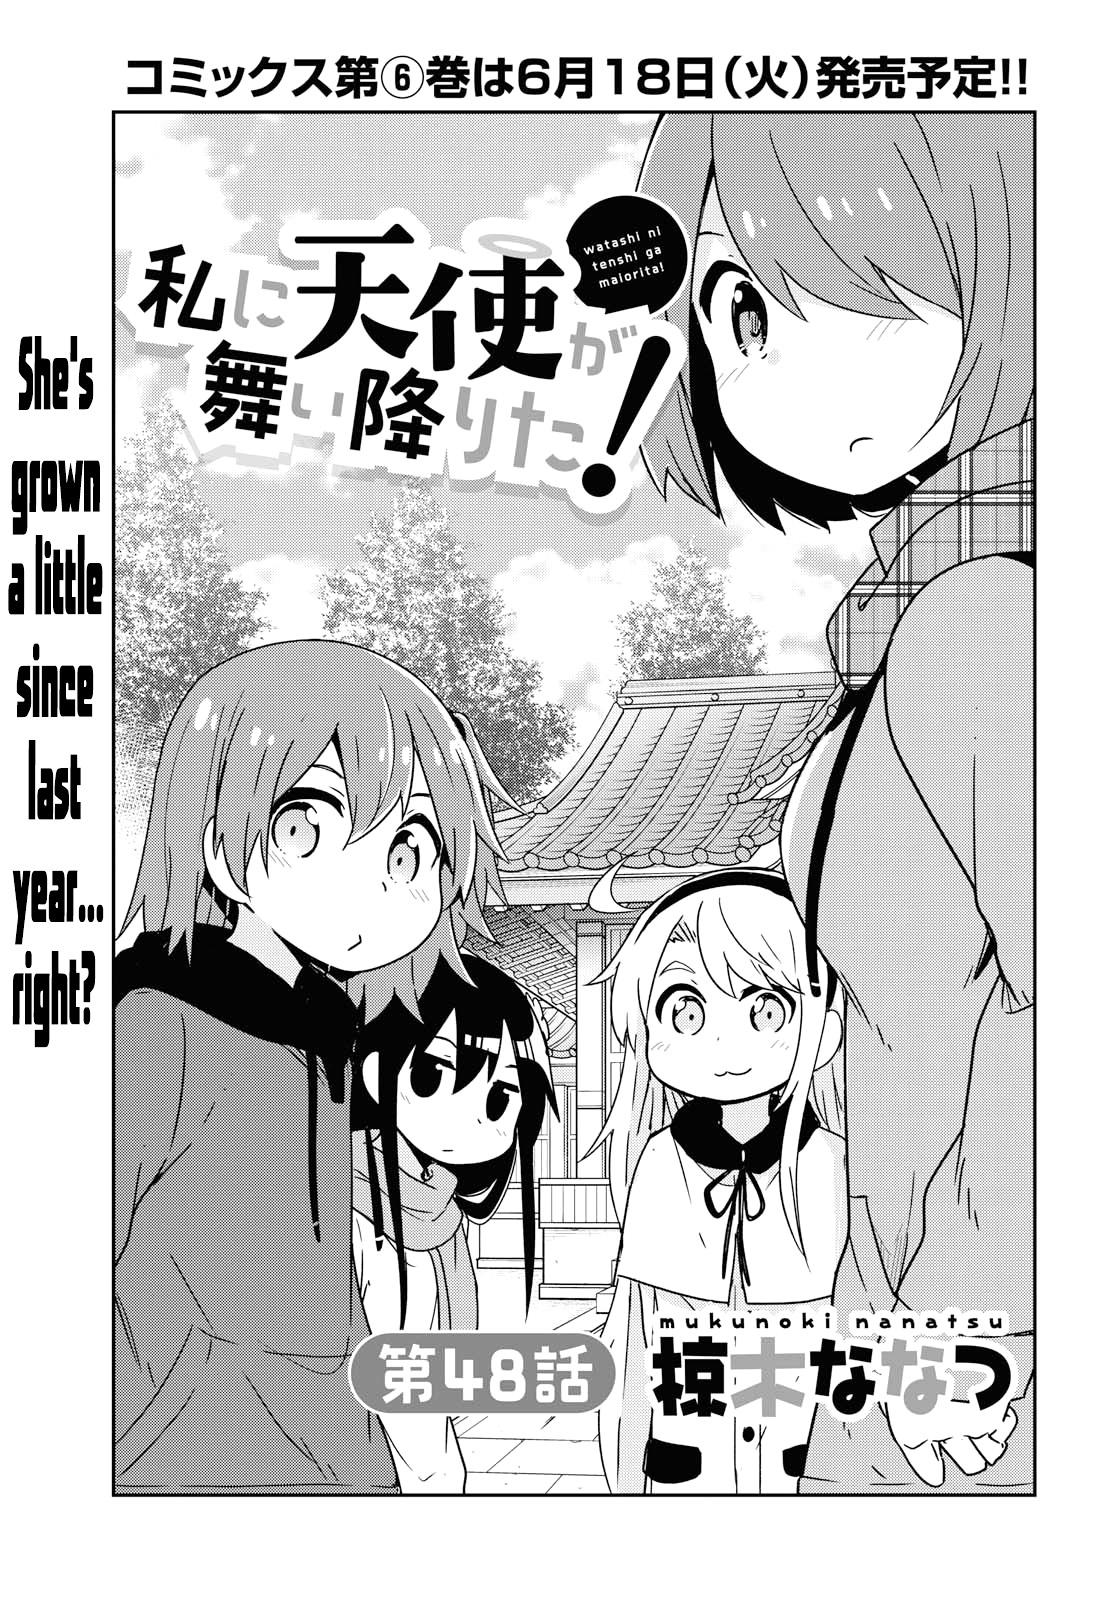 Read Watashi Ni Tenshi Ga Maiorita! Chapter 36 on Mangakakalot